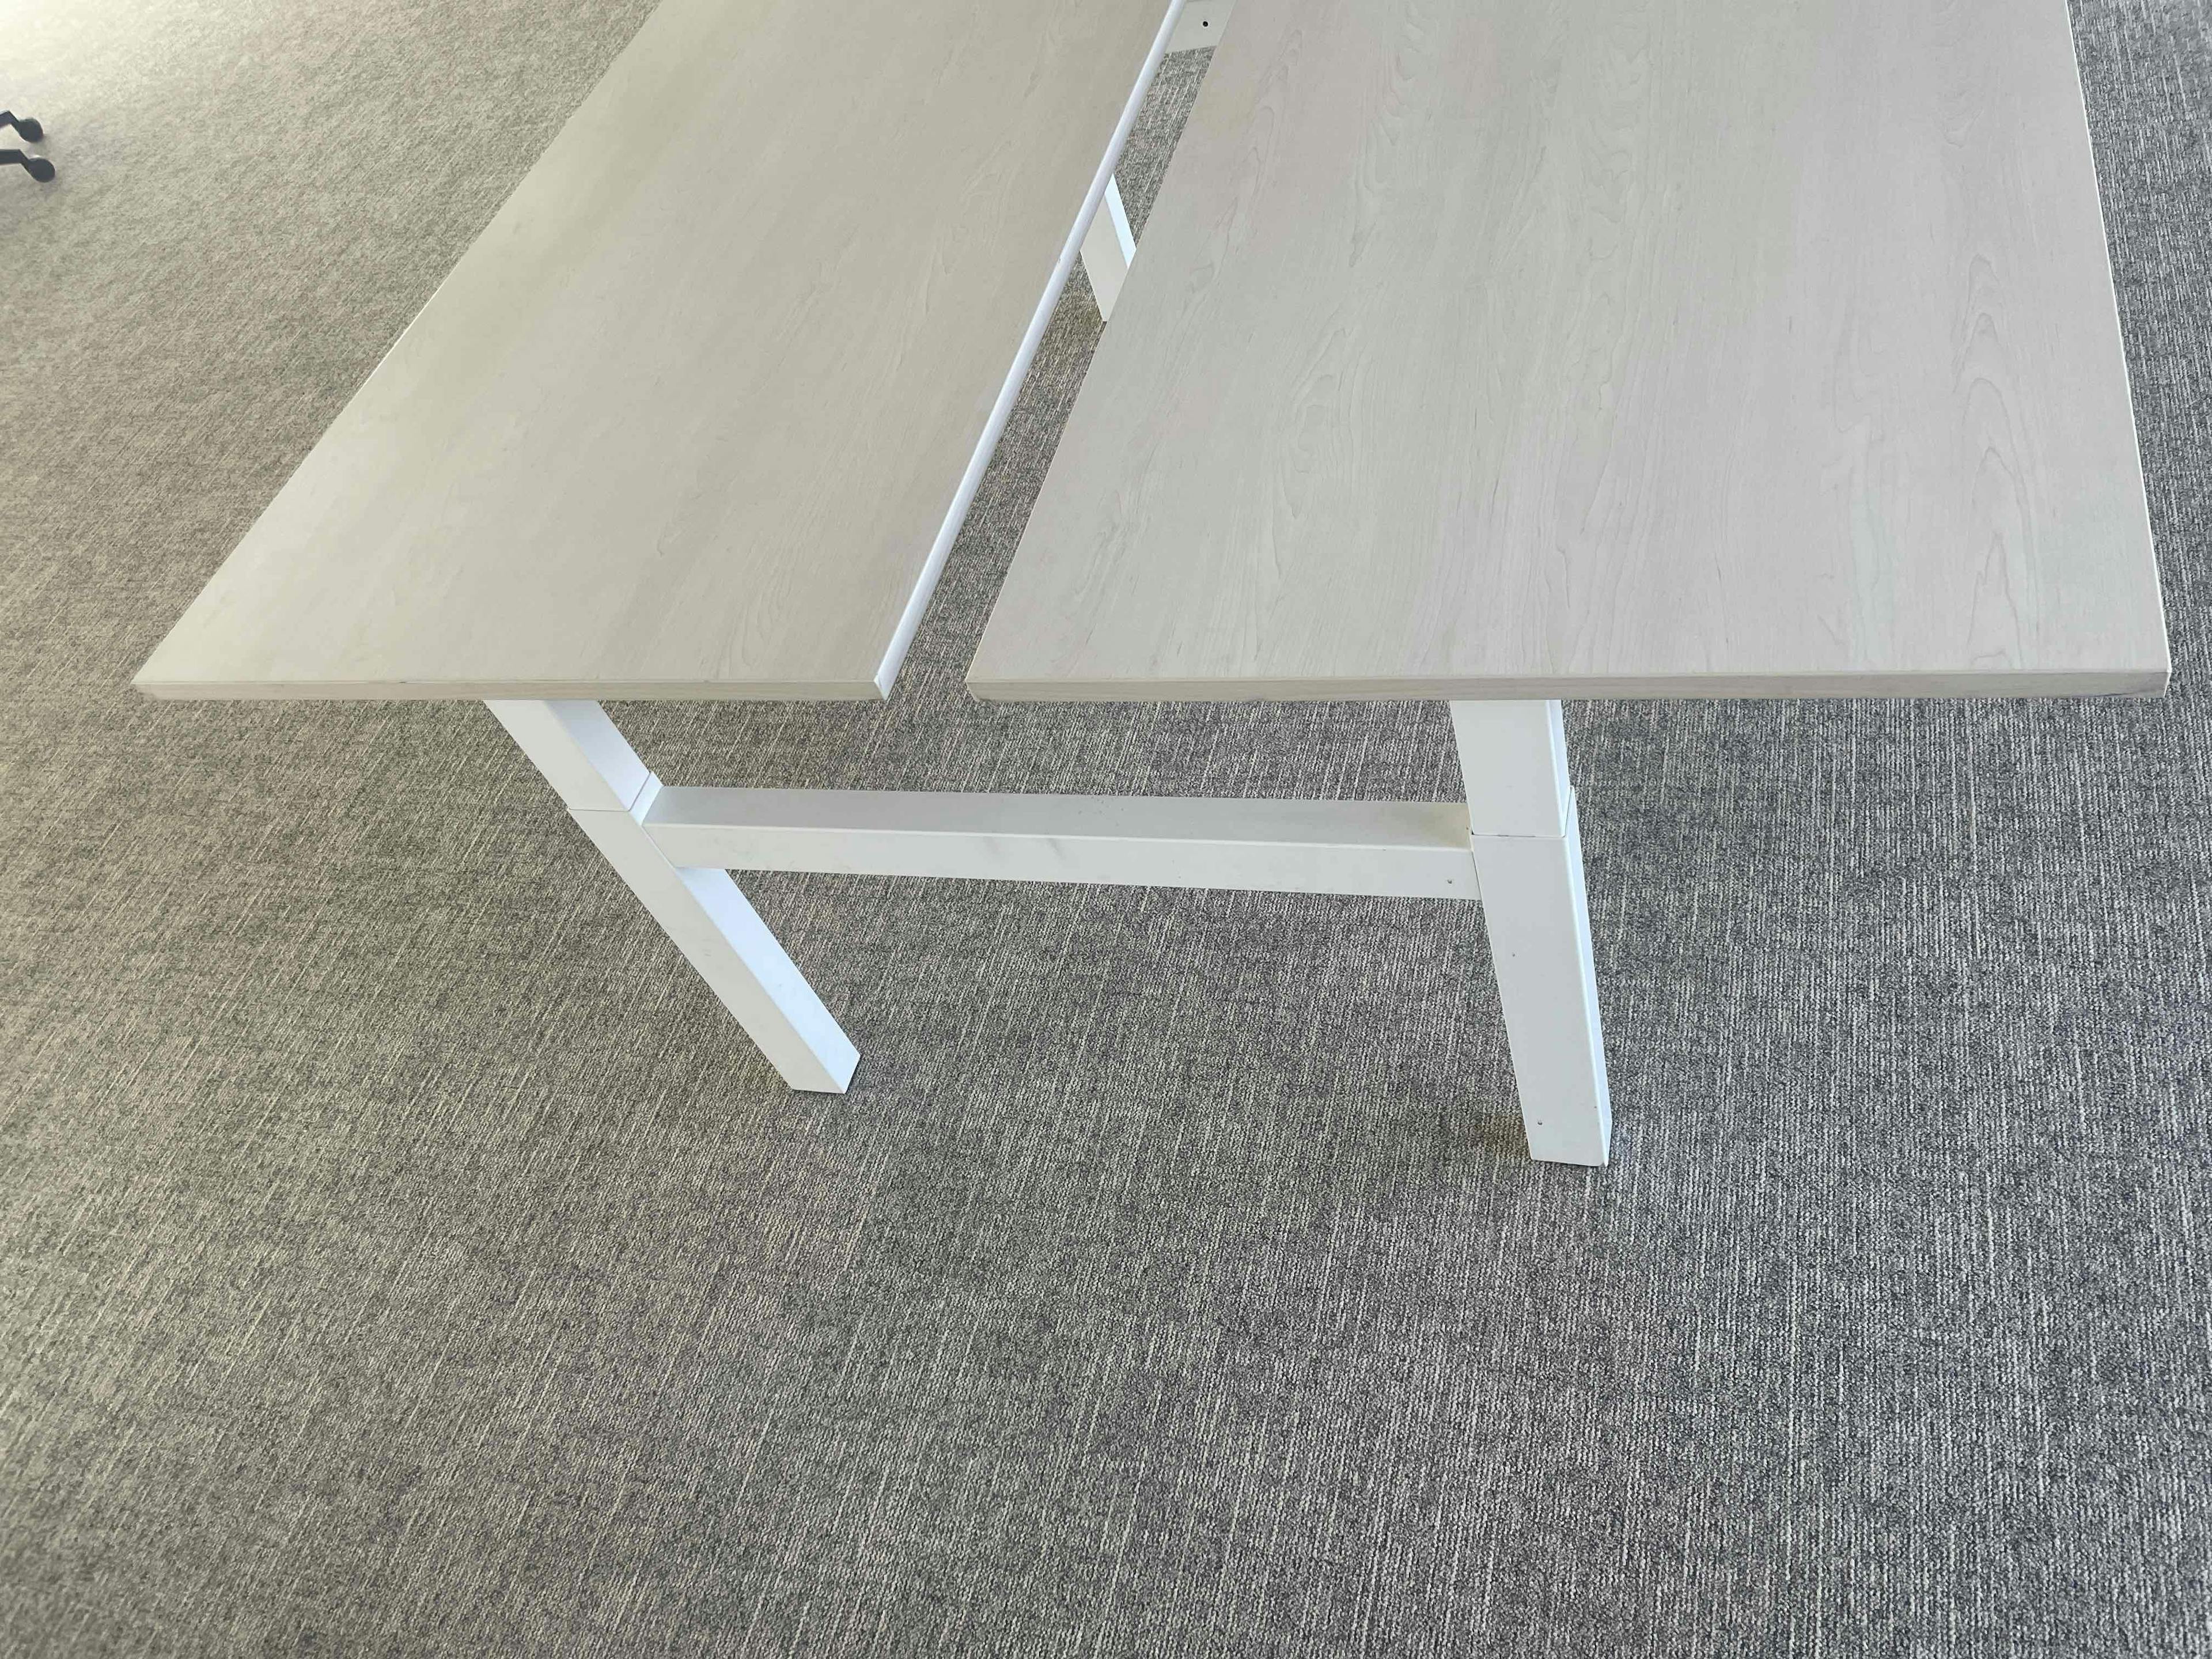 PREMIUM Bureau Duo - 160cm (MARKANT) - Second hand quality "Desks" - Relieve Furniture - 3